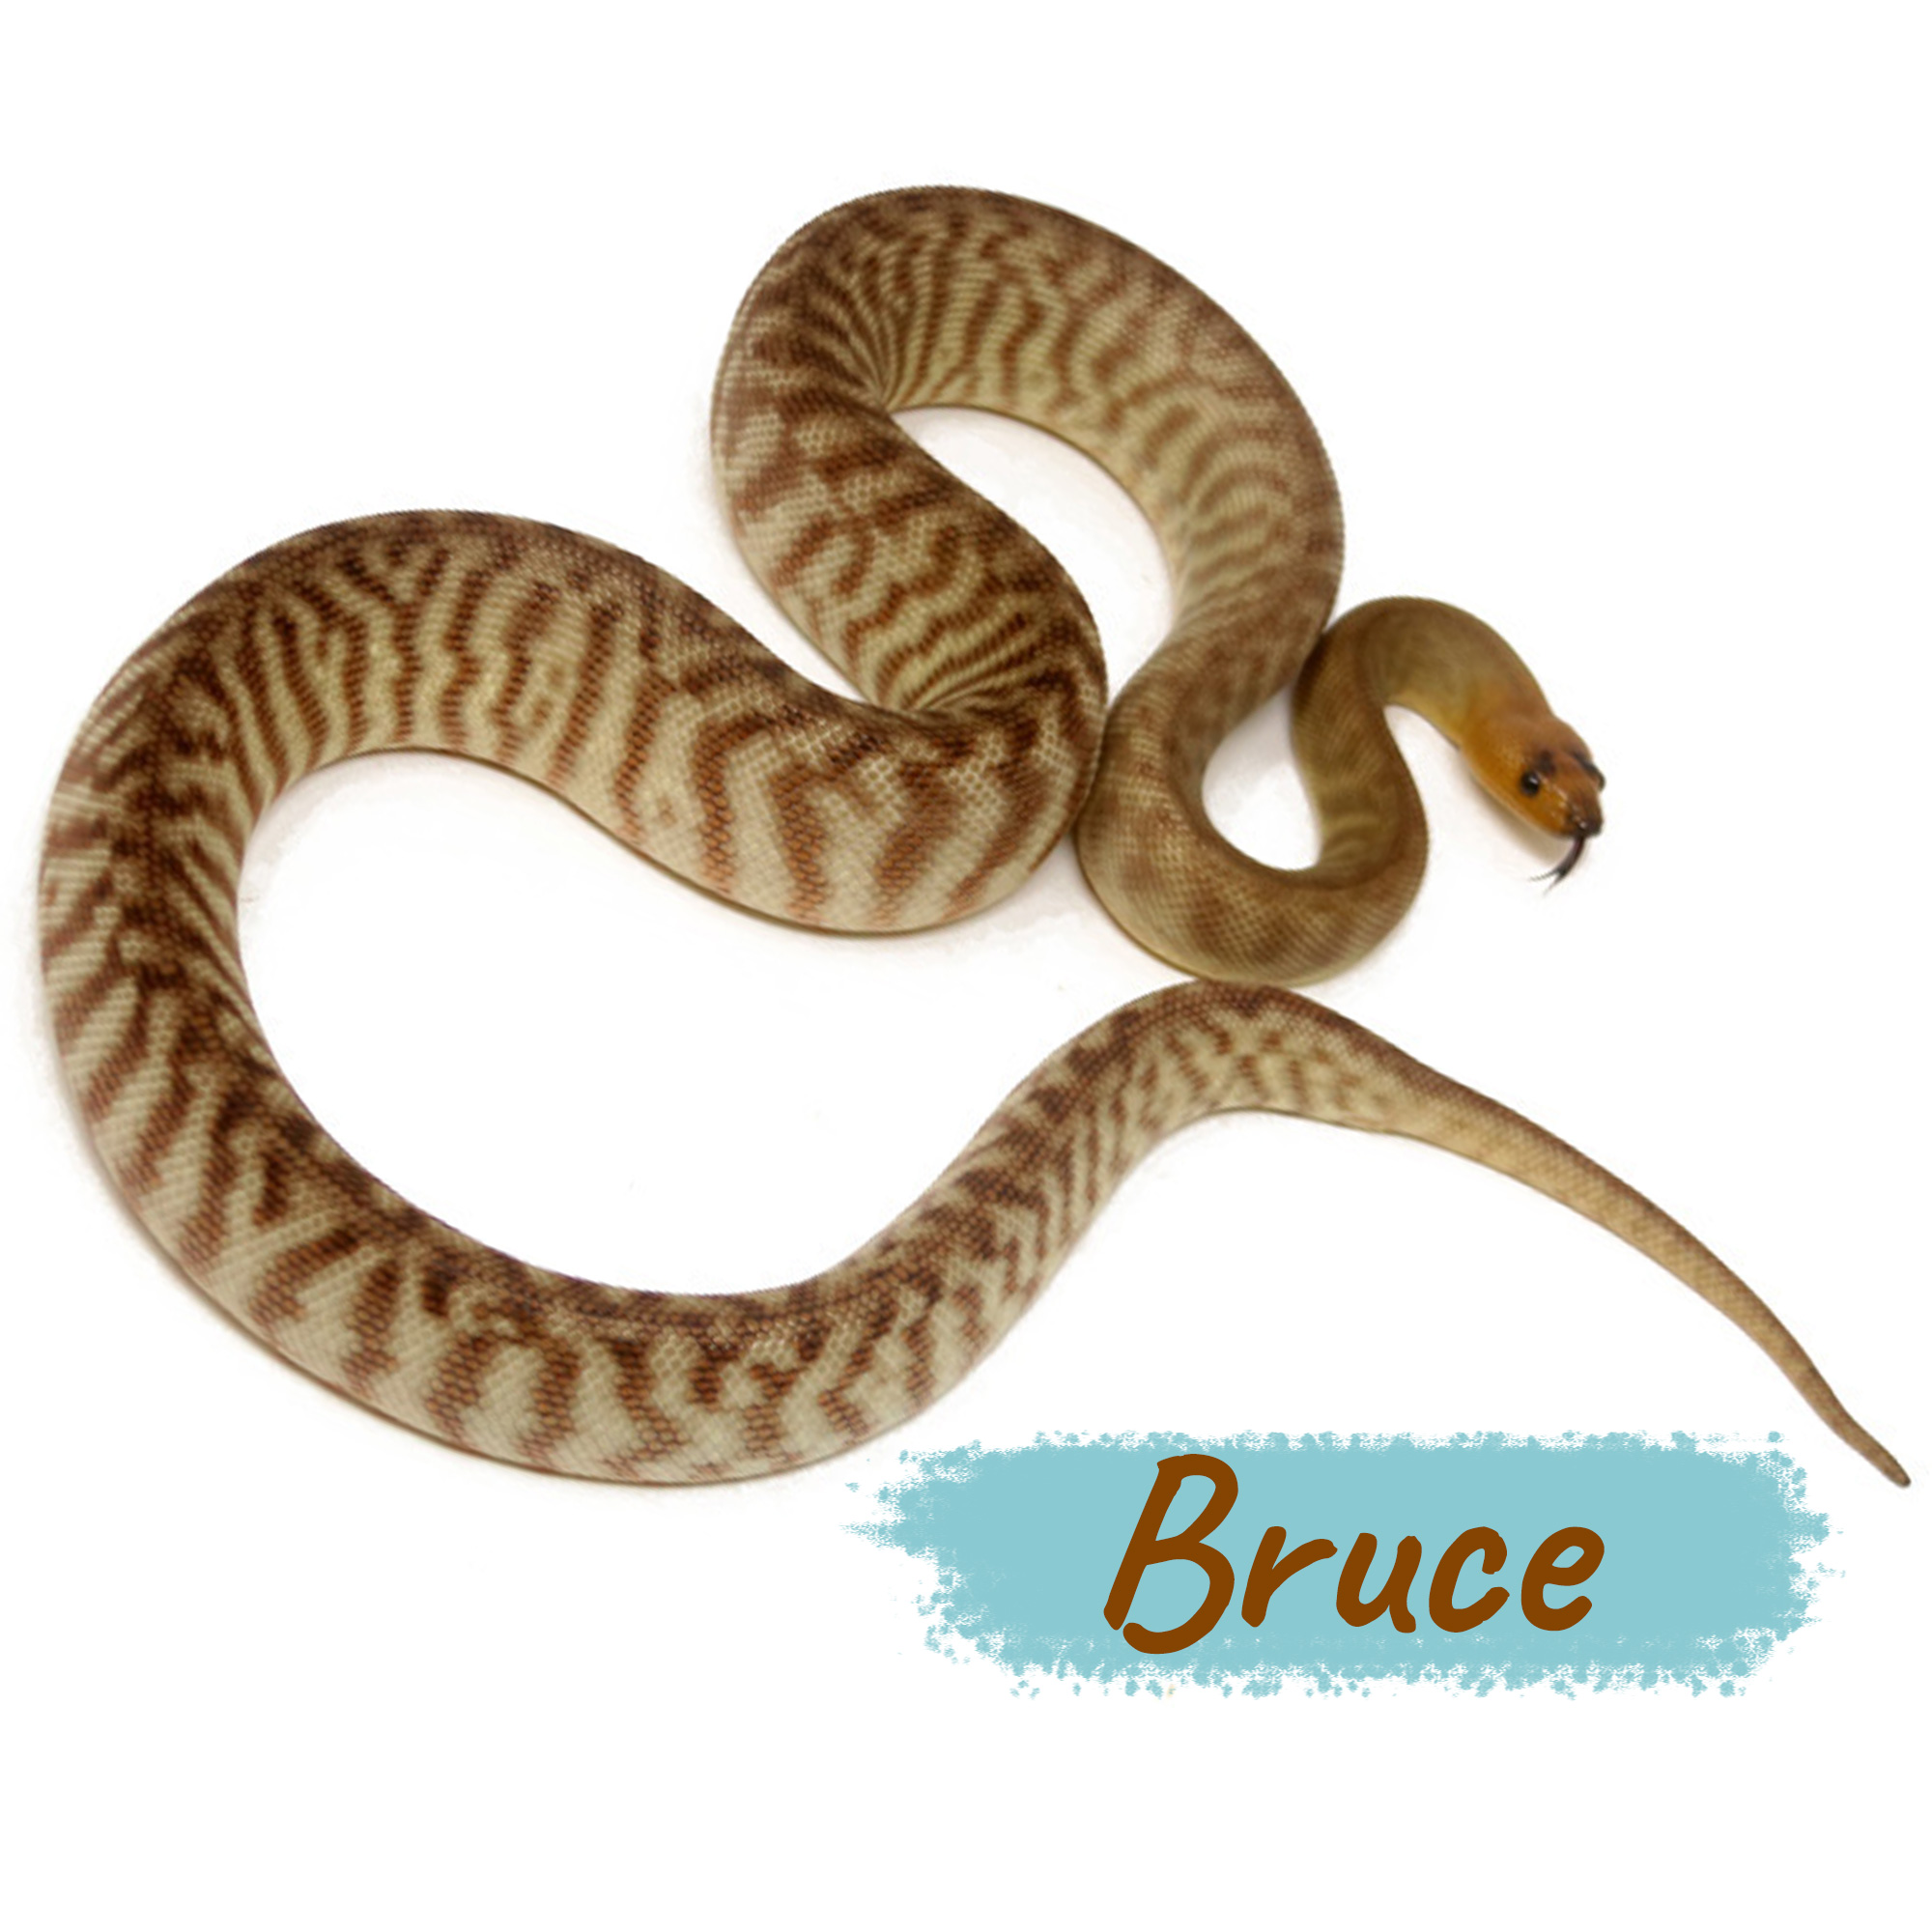 Bruce Woma Python (Aspidites ramsayi)